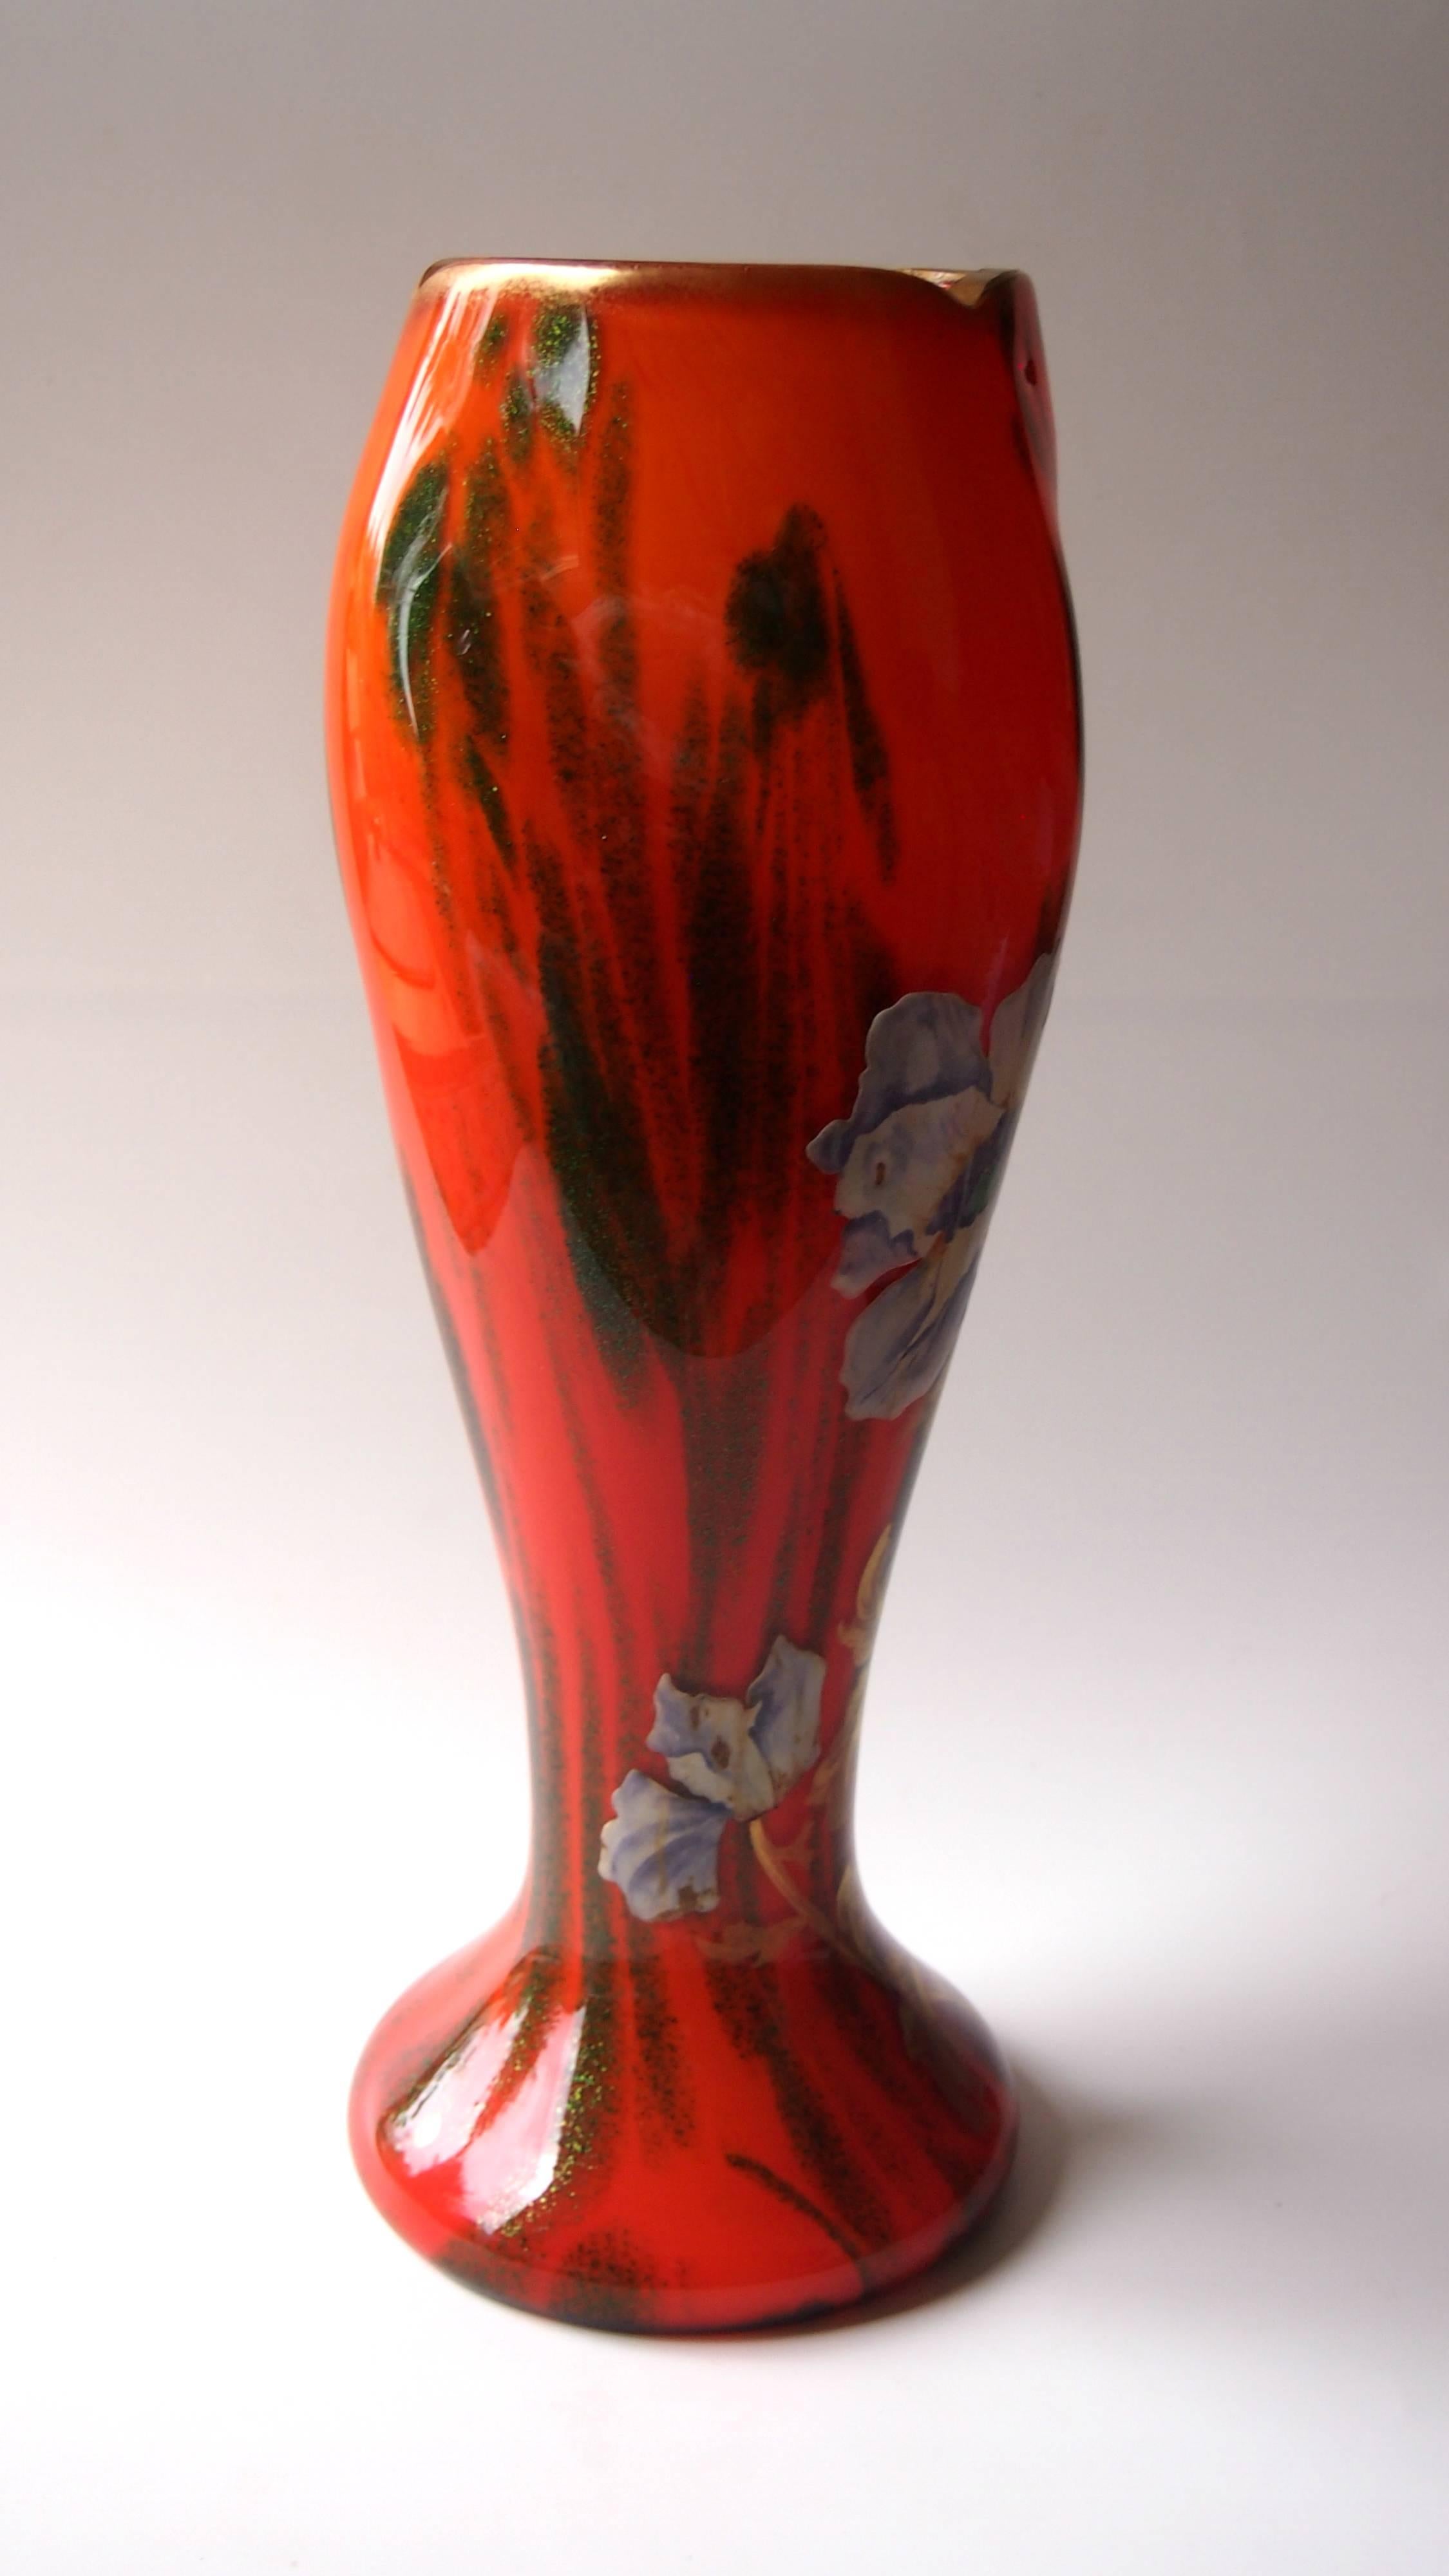 Czech Bohemian Art Nouveau Enamelled Harrach Glass Vase in Orange and Aventurine Green For Sale